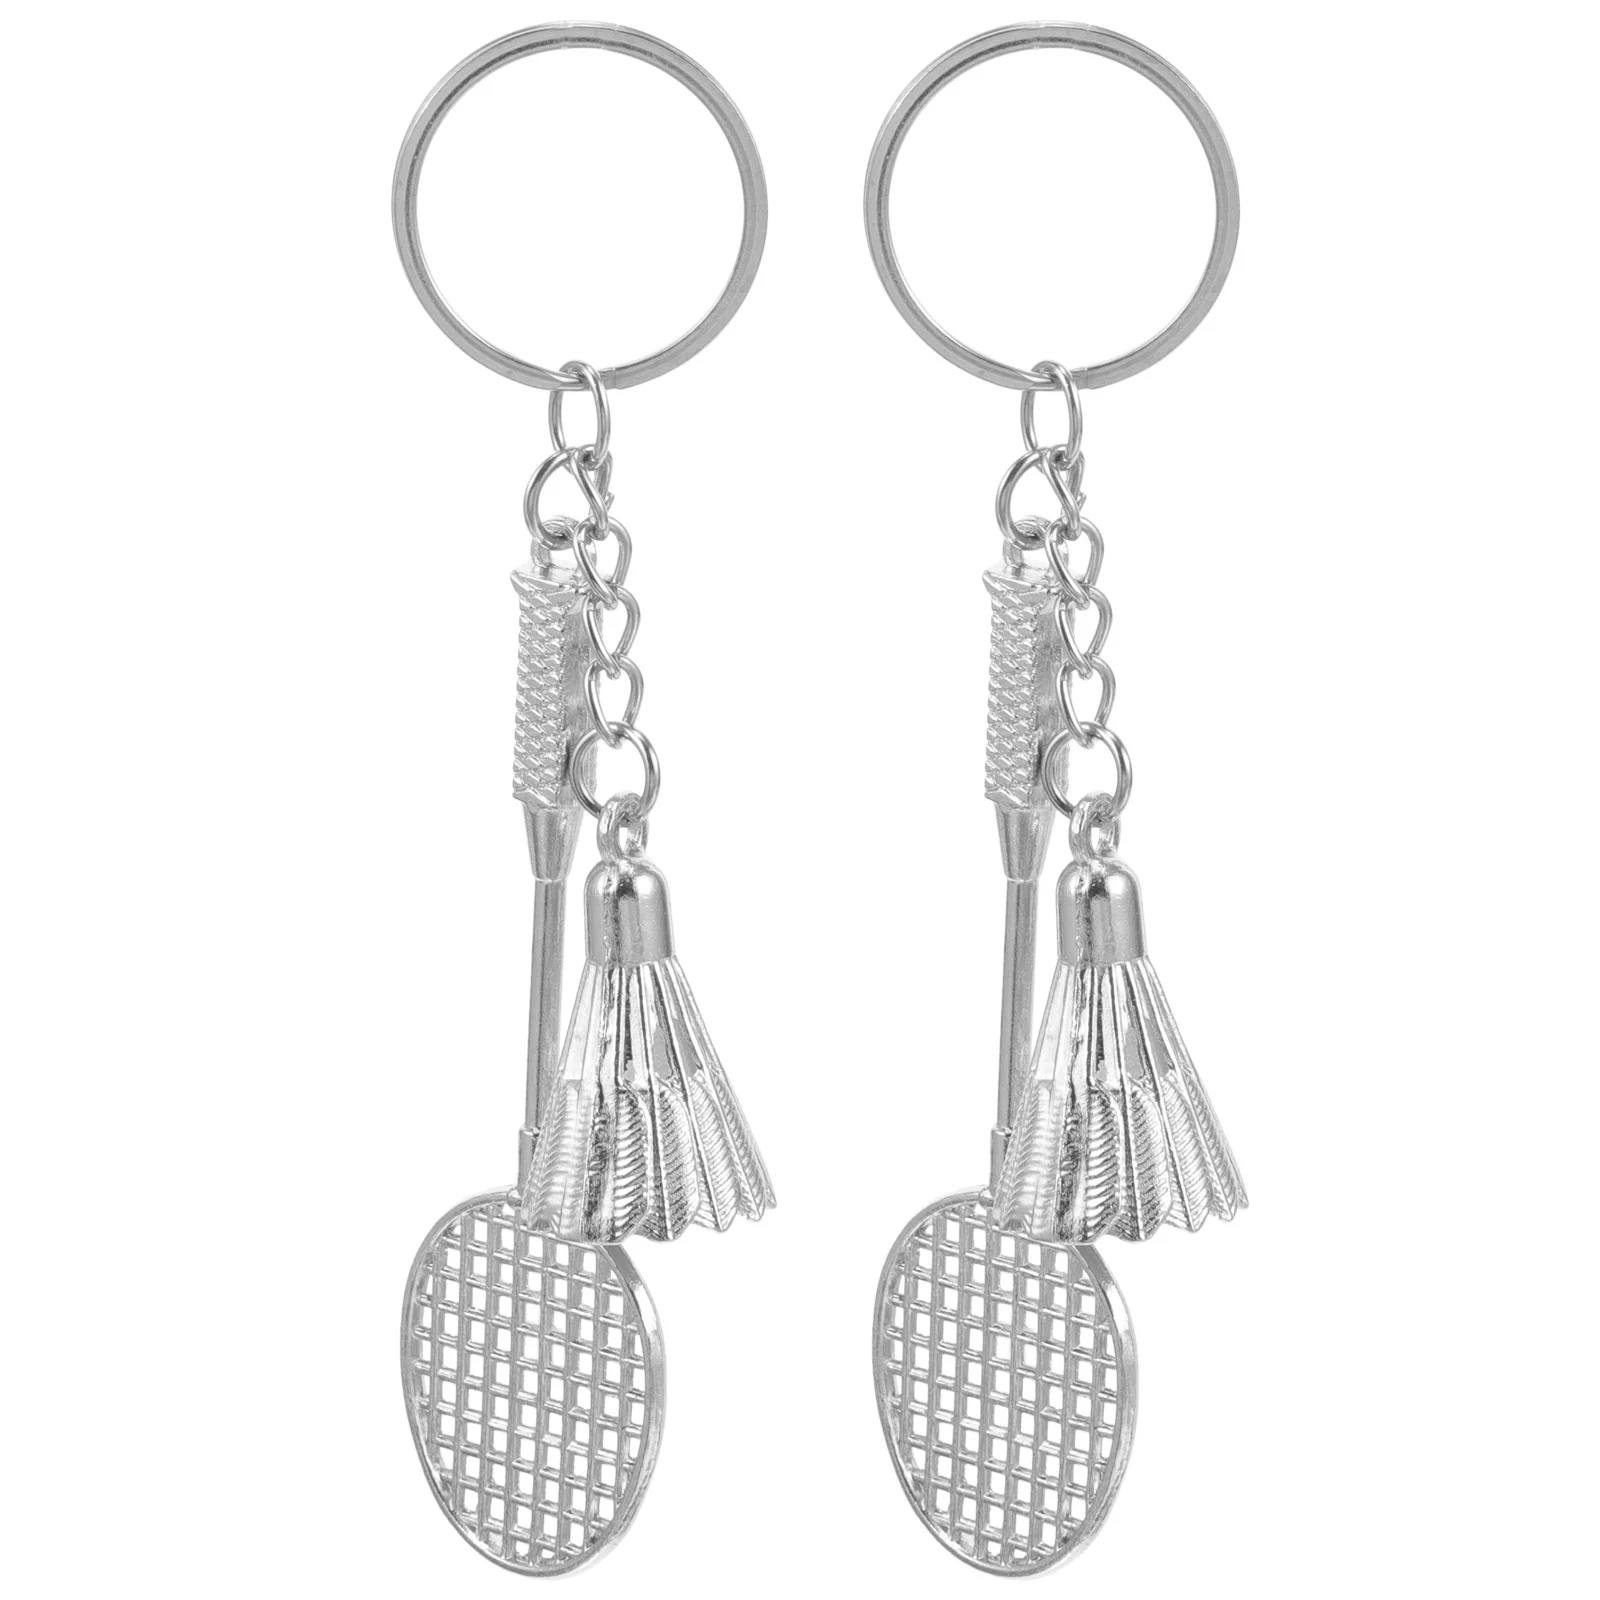 

2 Pcs Metal Keychain Hanging Badminton Ring Decorative Rings Keychains Backpack Trinket Pendant Keyrings Gift Women Adorns